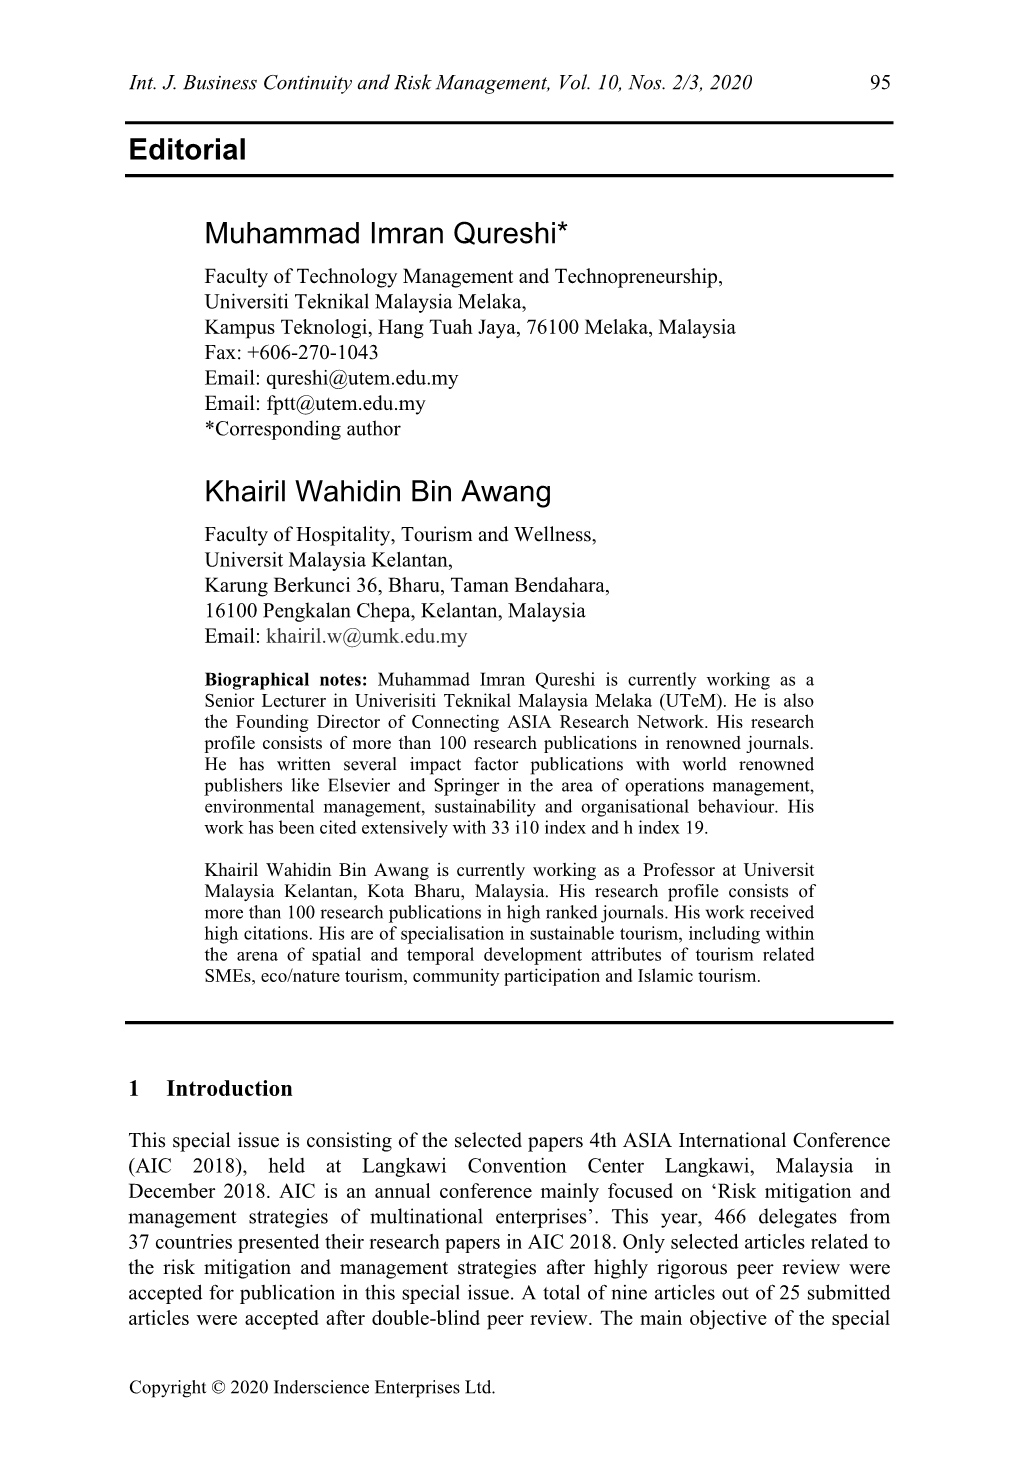 Editorial Muhammad Imran Qureshi* Khairil Wahidin Bin Awang